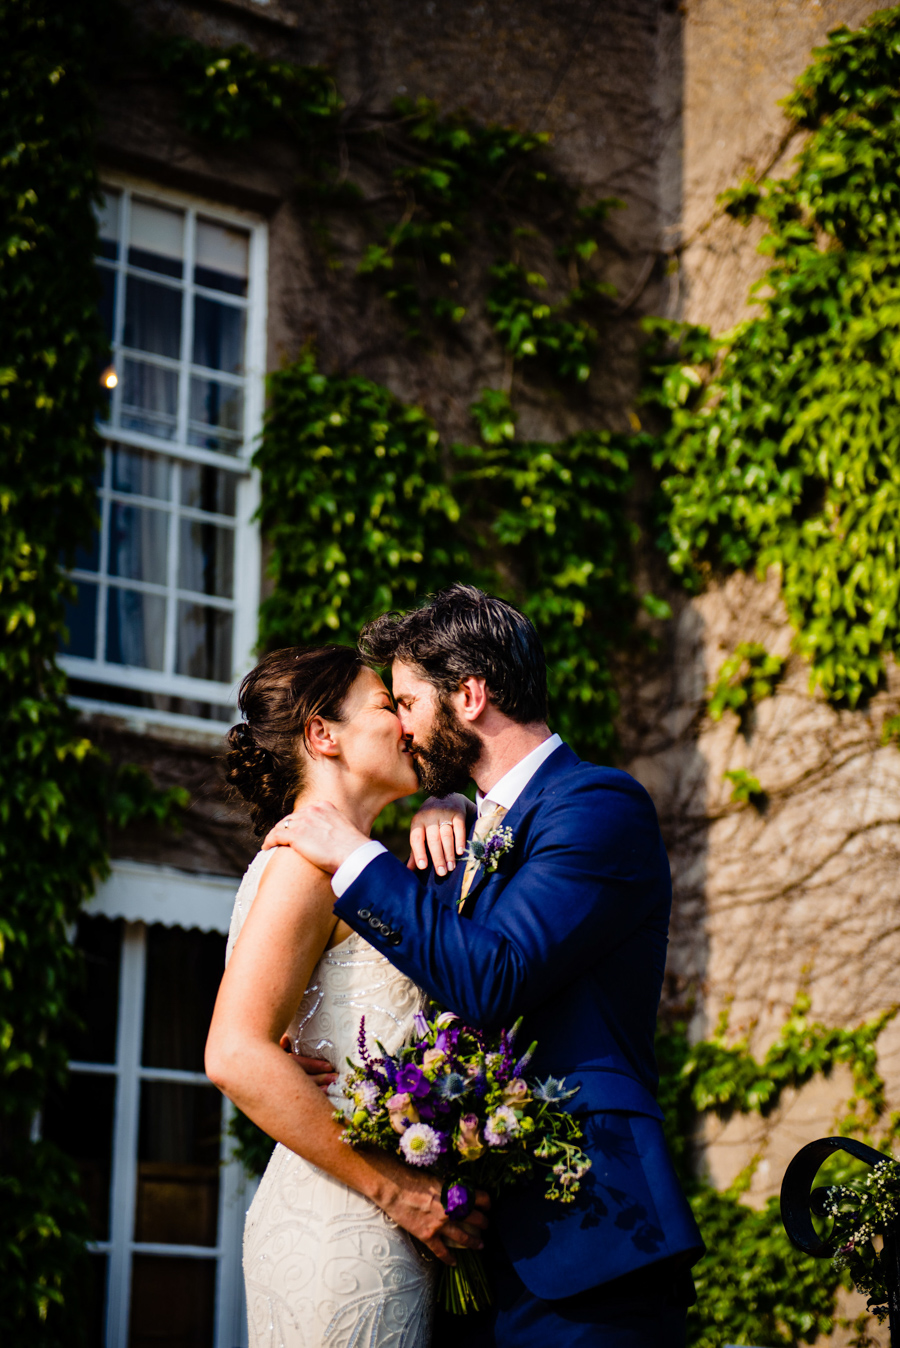 Nikki & Gareth's gloriously happy Pennard House wedding with Jonny Barratt Photography (37)